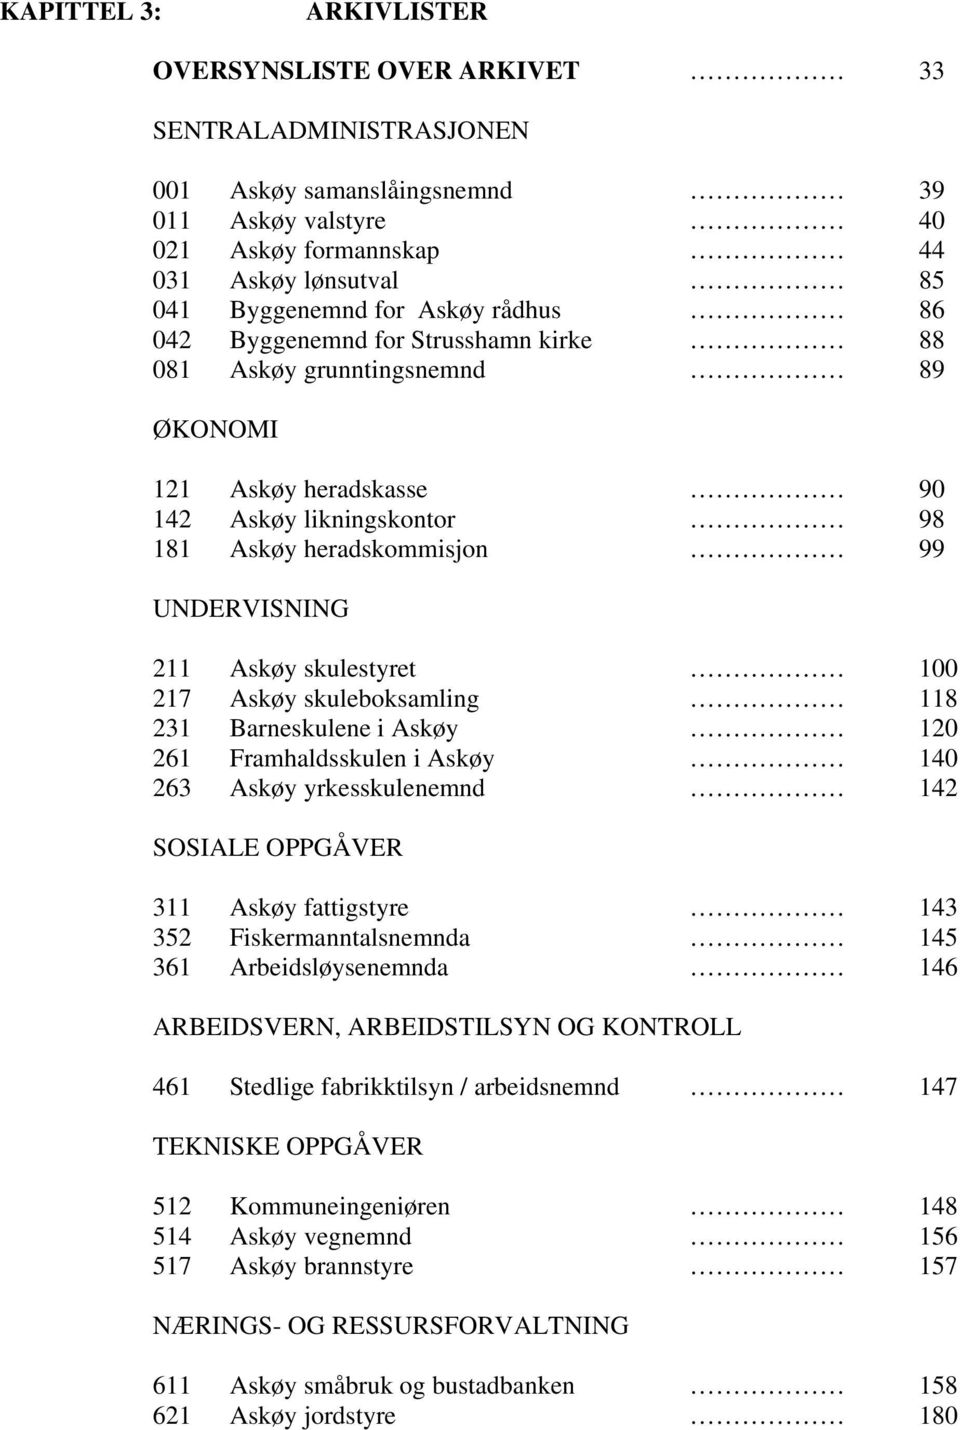 skulestyret 100 217 Askøy skuleboksamling 118 231 Barneskulene i Askøy 120 261 Framhaldsskulen i Askøy 140 263 Askøy yrkesskulenemnd 142 SOSIALE OPPGÅVER 311 Askøy fattigstyre 143 352